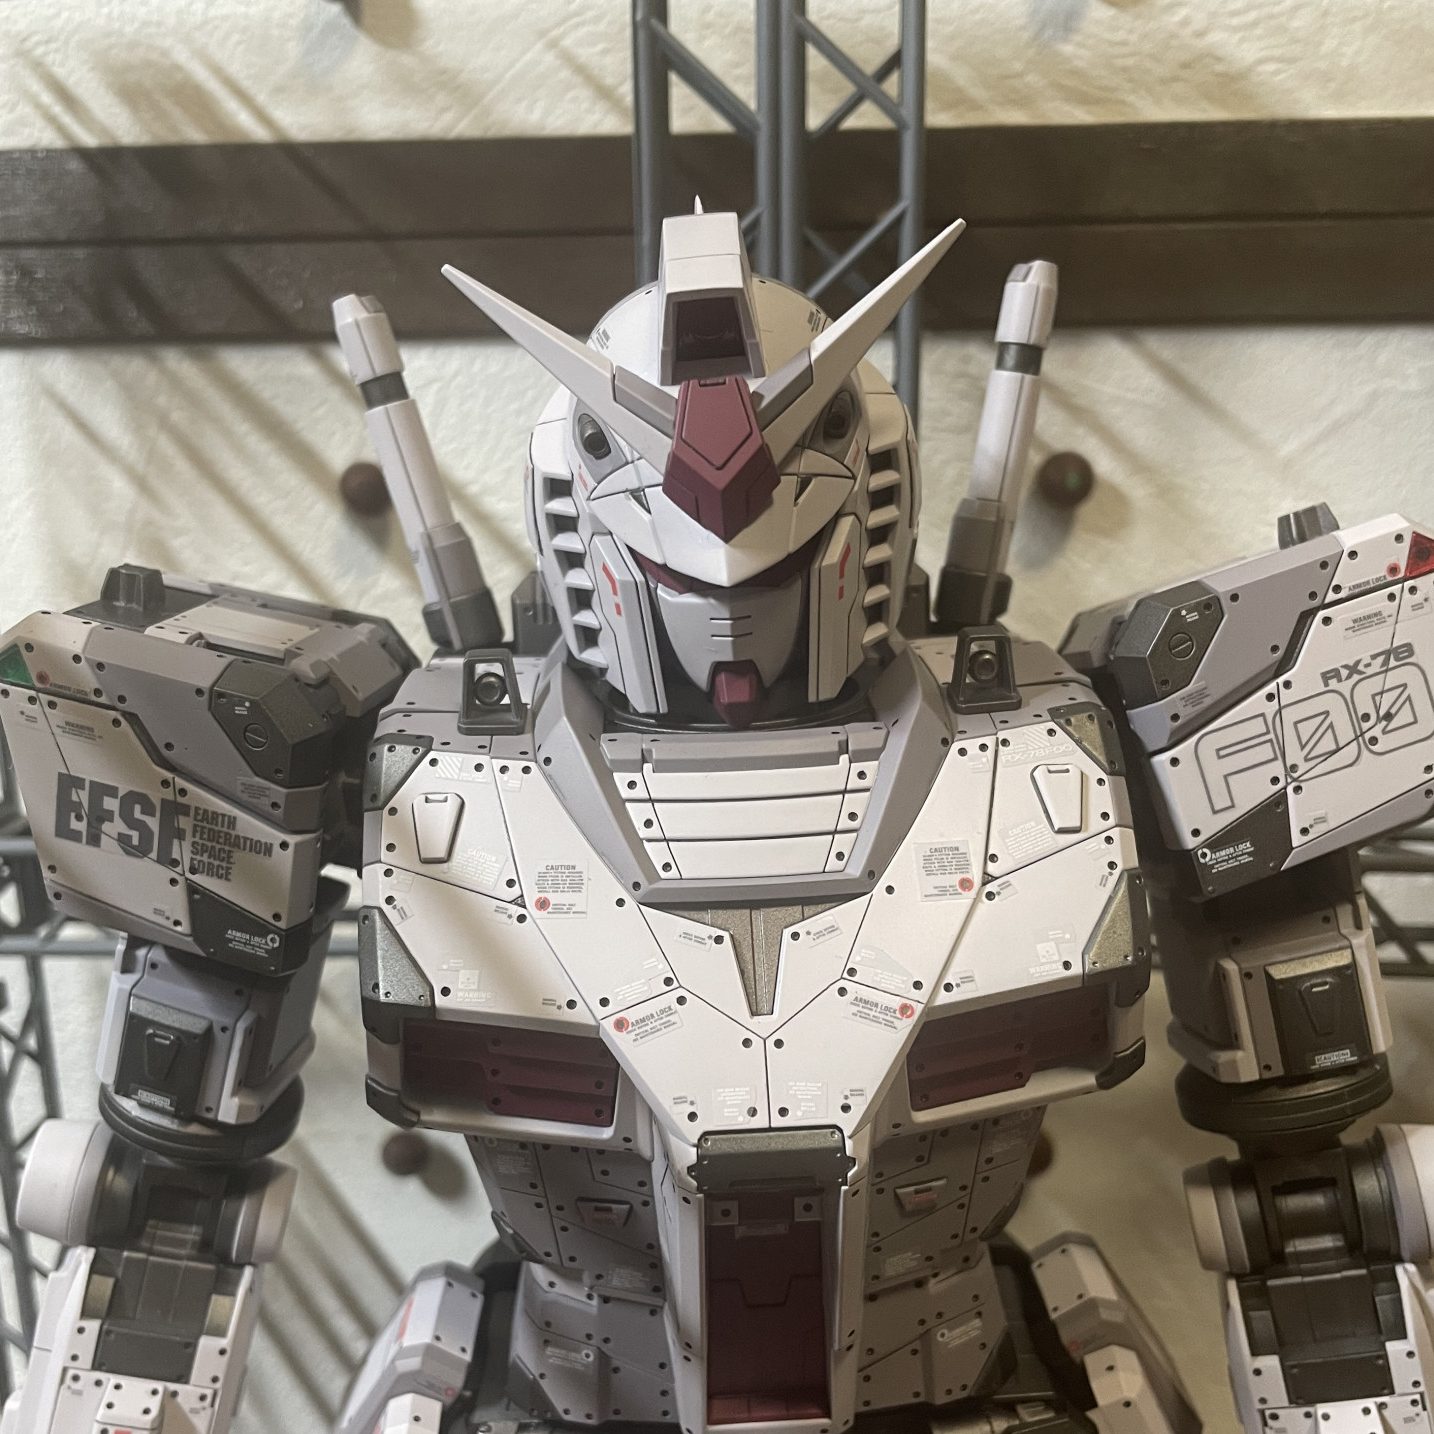 1/48 RX-78F00 Gundam – Side Seven Exports